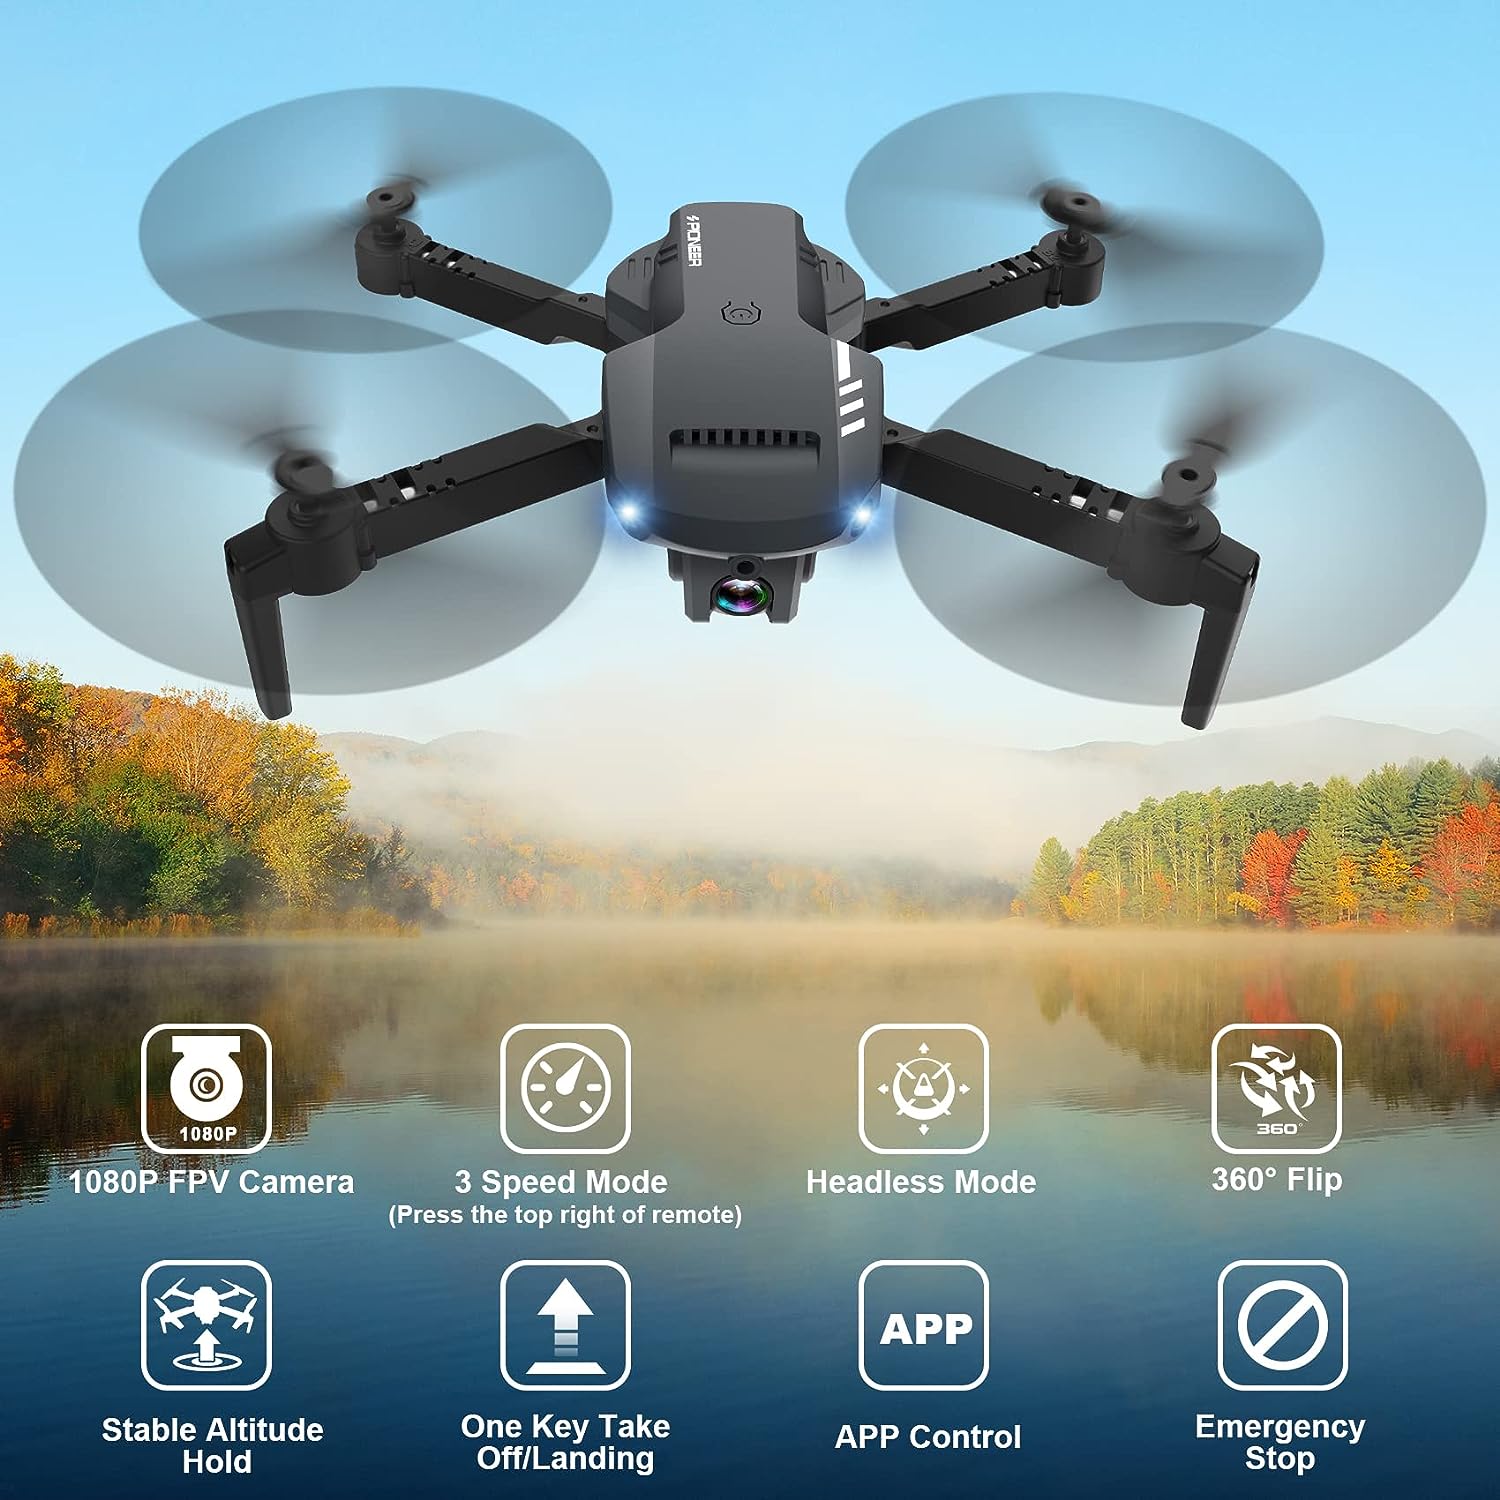 RADCLO Mini Drone Features